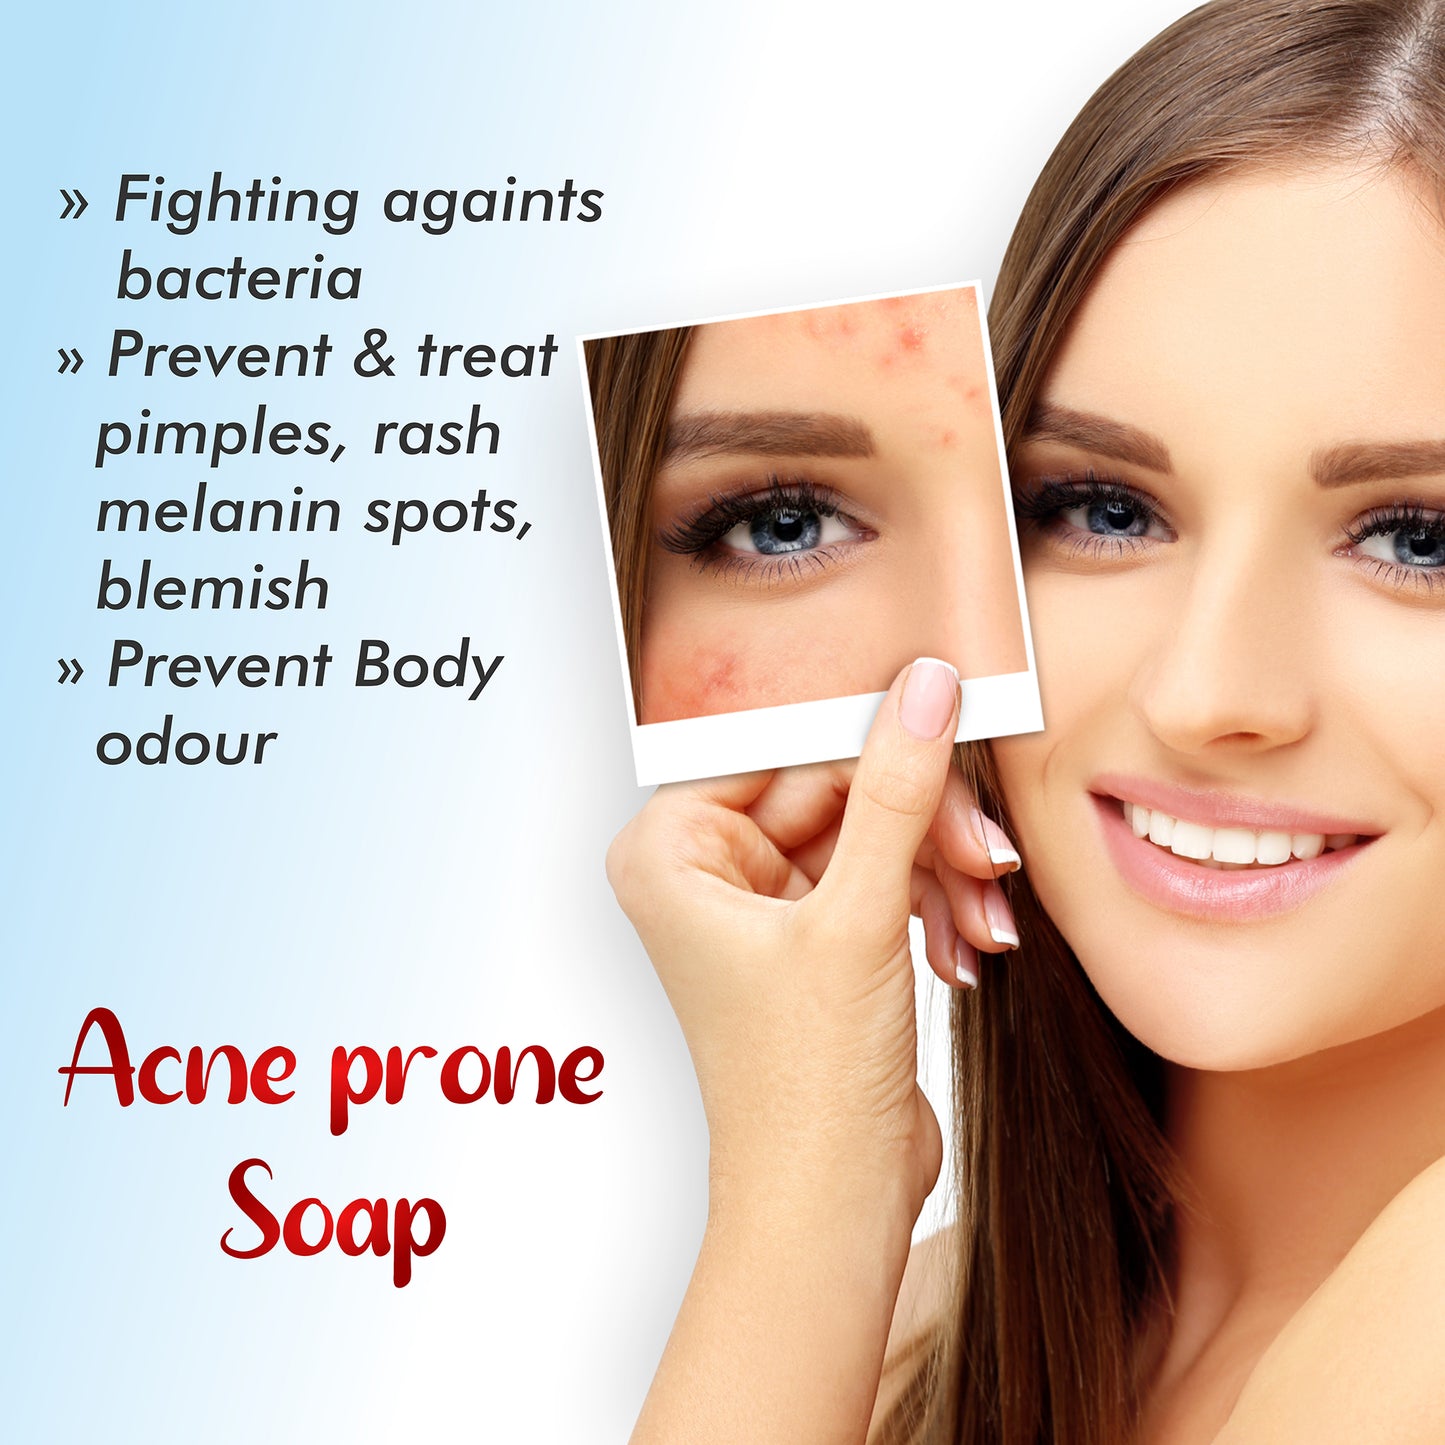 Gal-Acne (Acne Prone Soap) 75gm